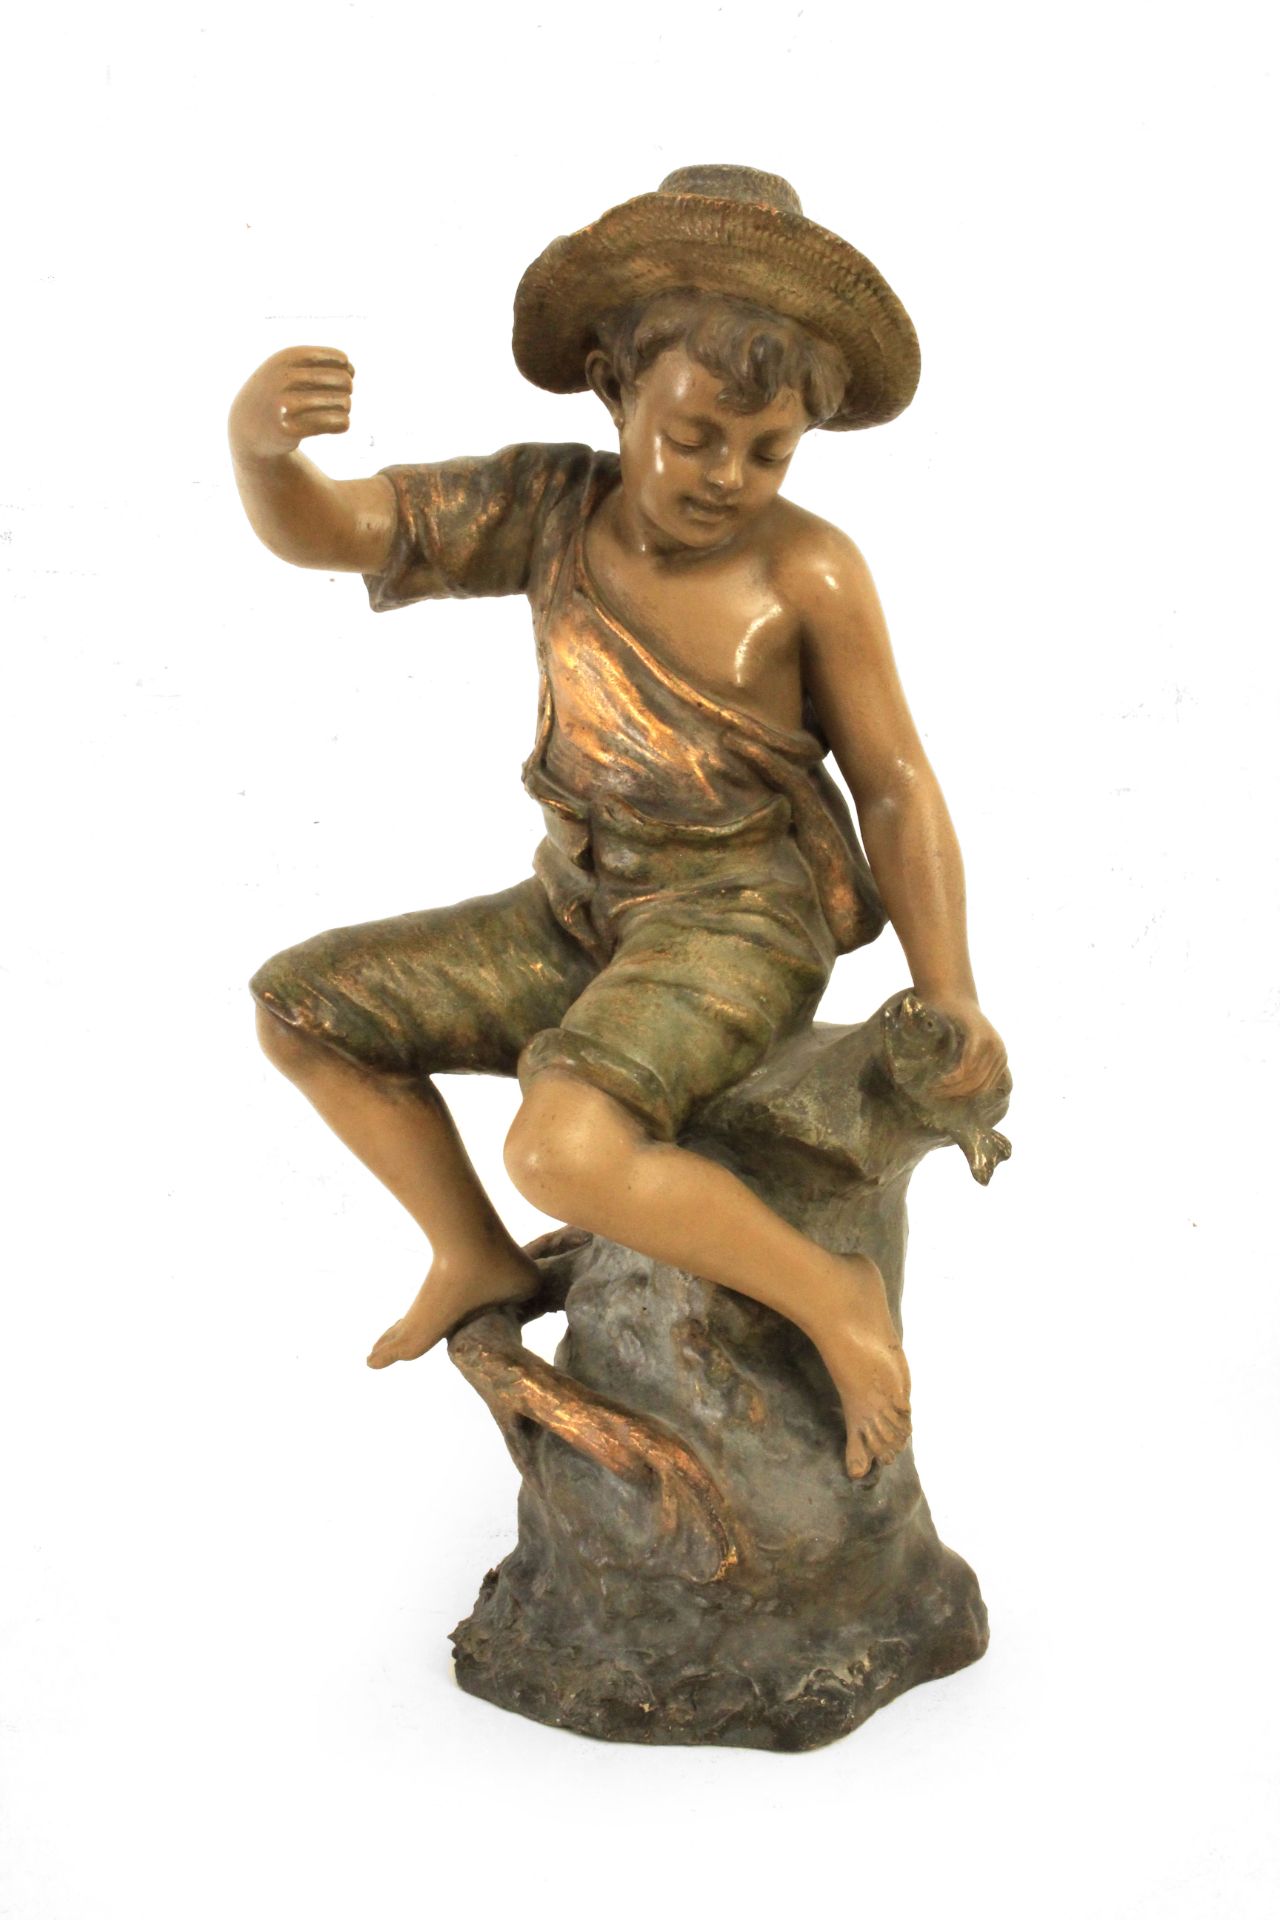 A 20th century figure of a fisher boy in Goldscheider terracotta